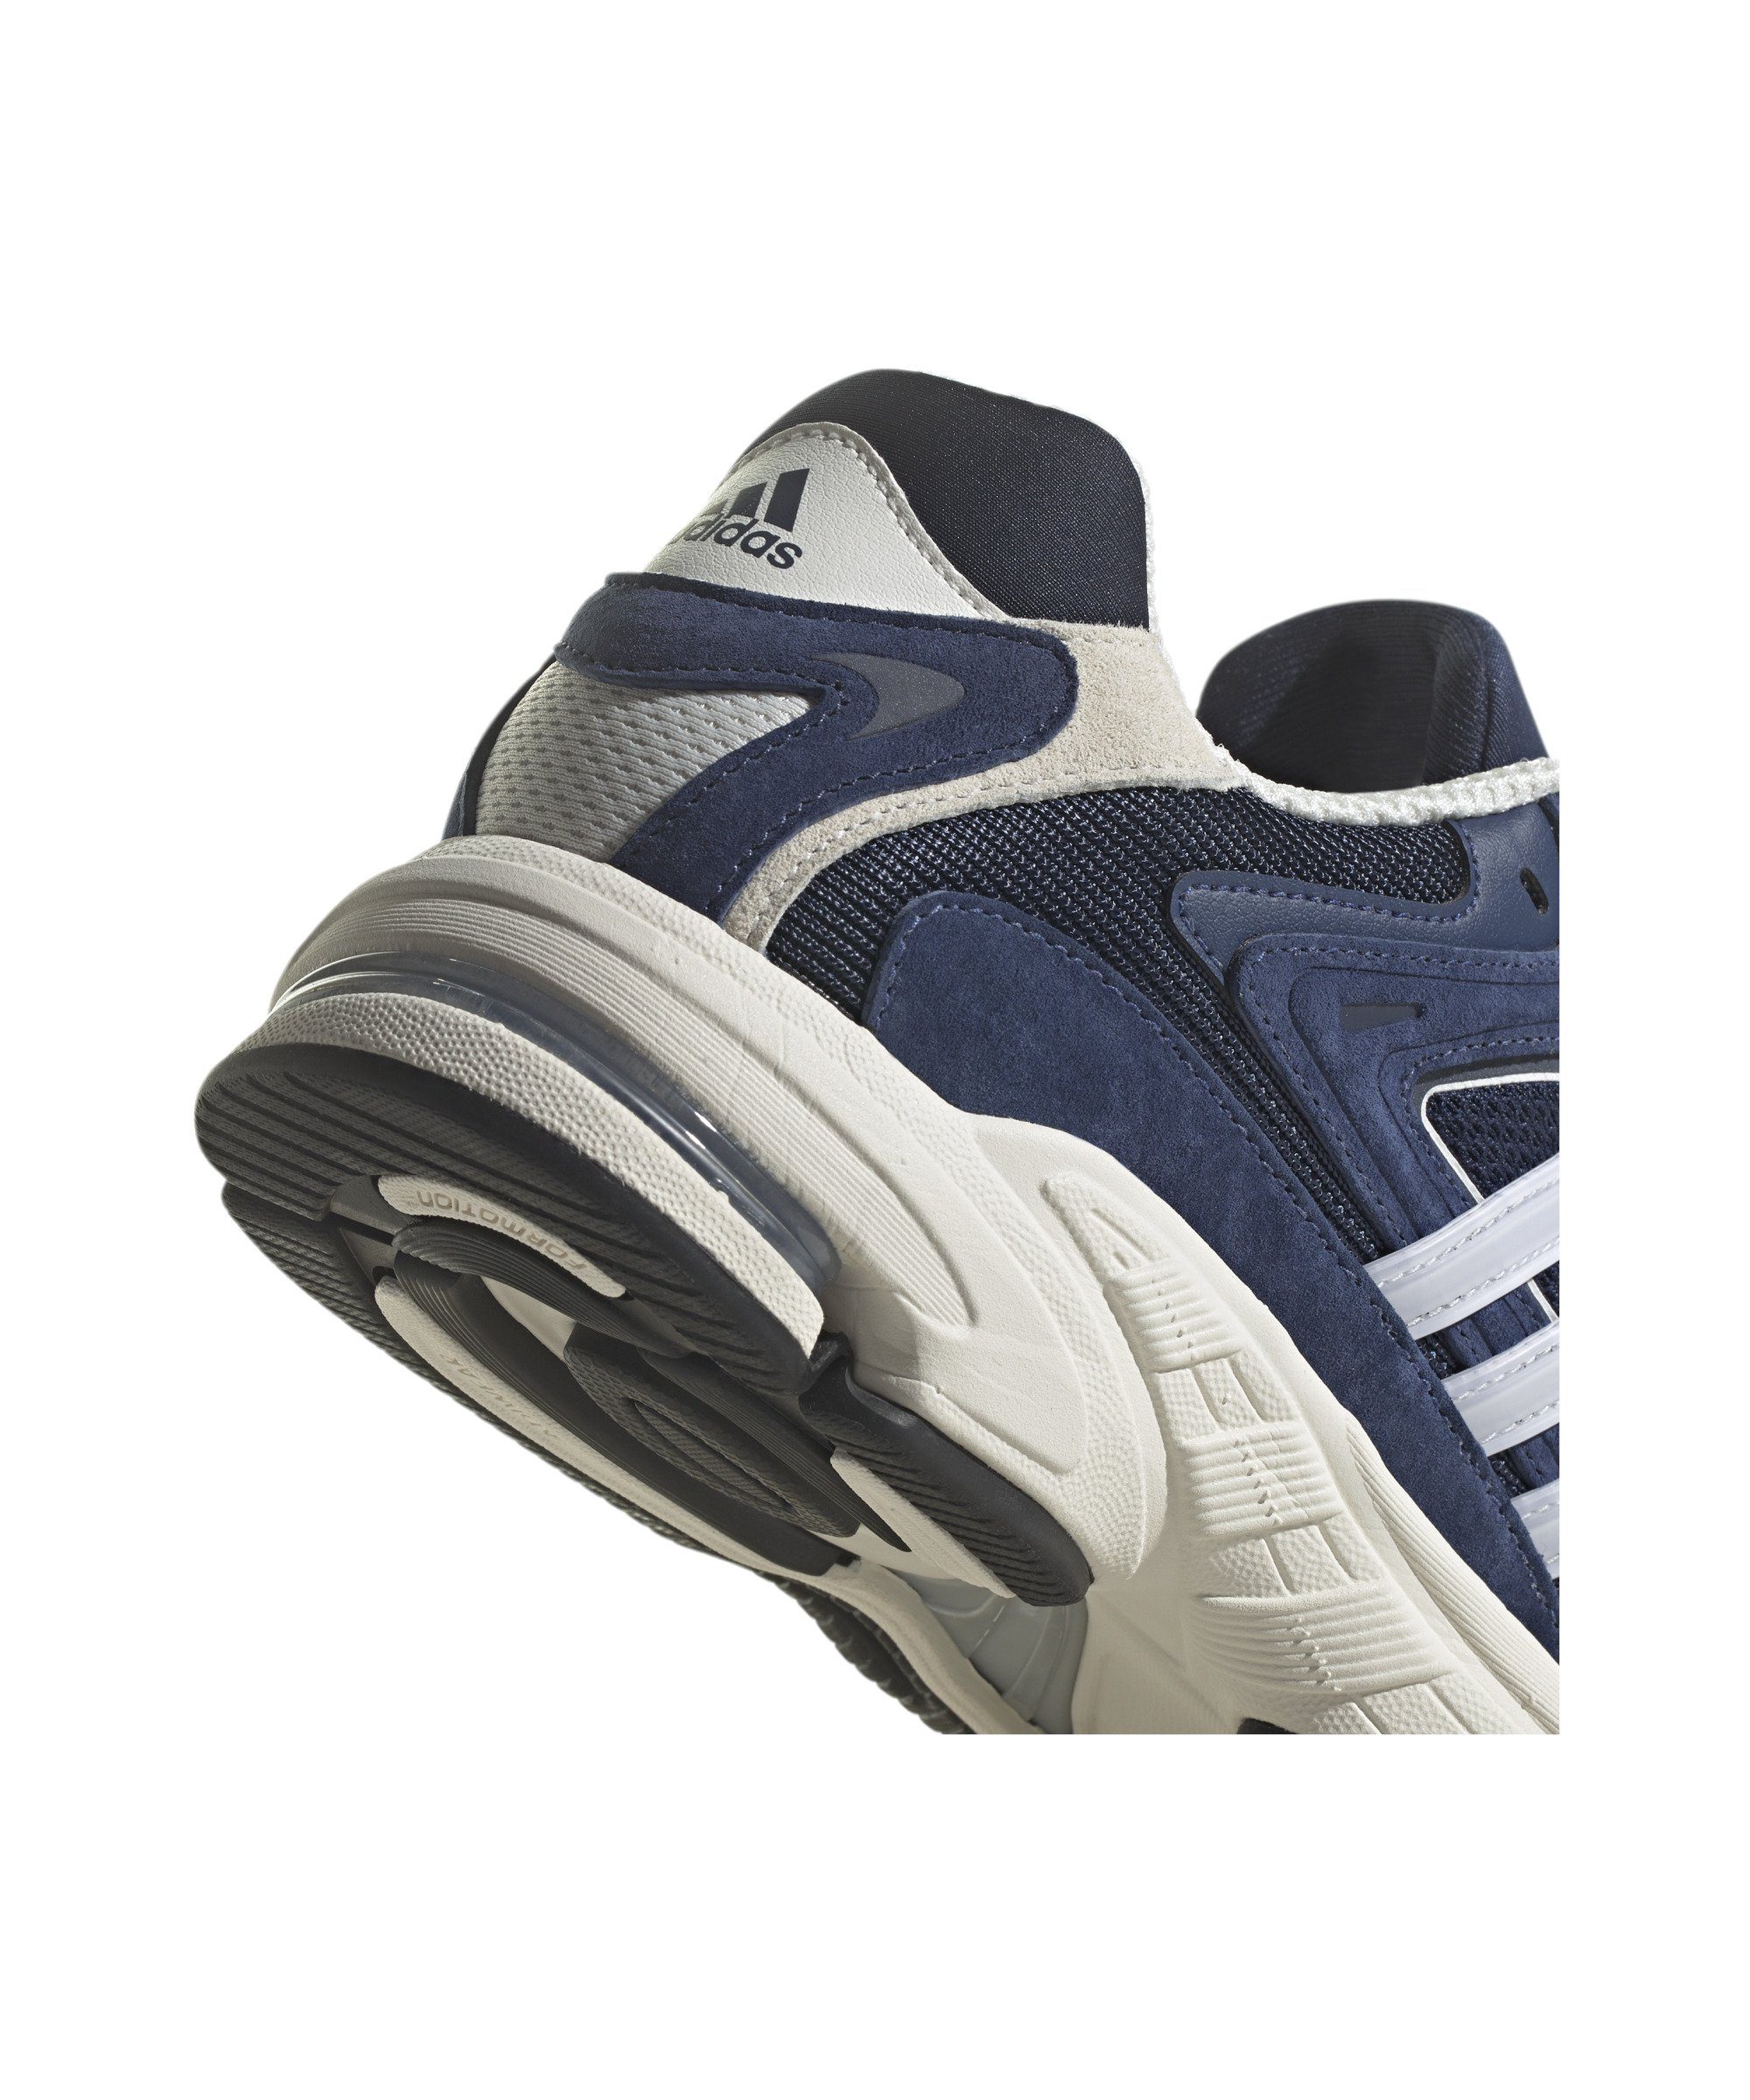 adidas Originals Response Sneaker blaublau CL Beige